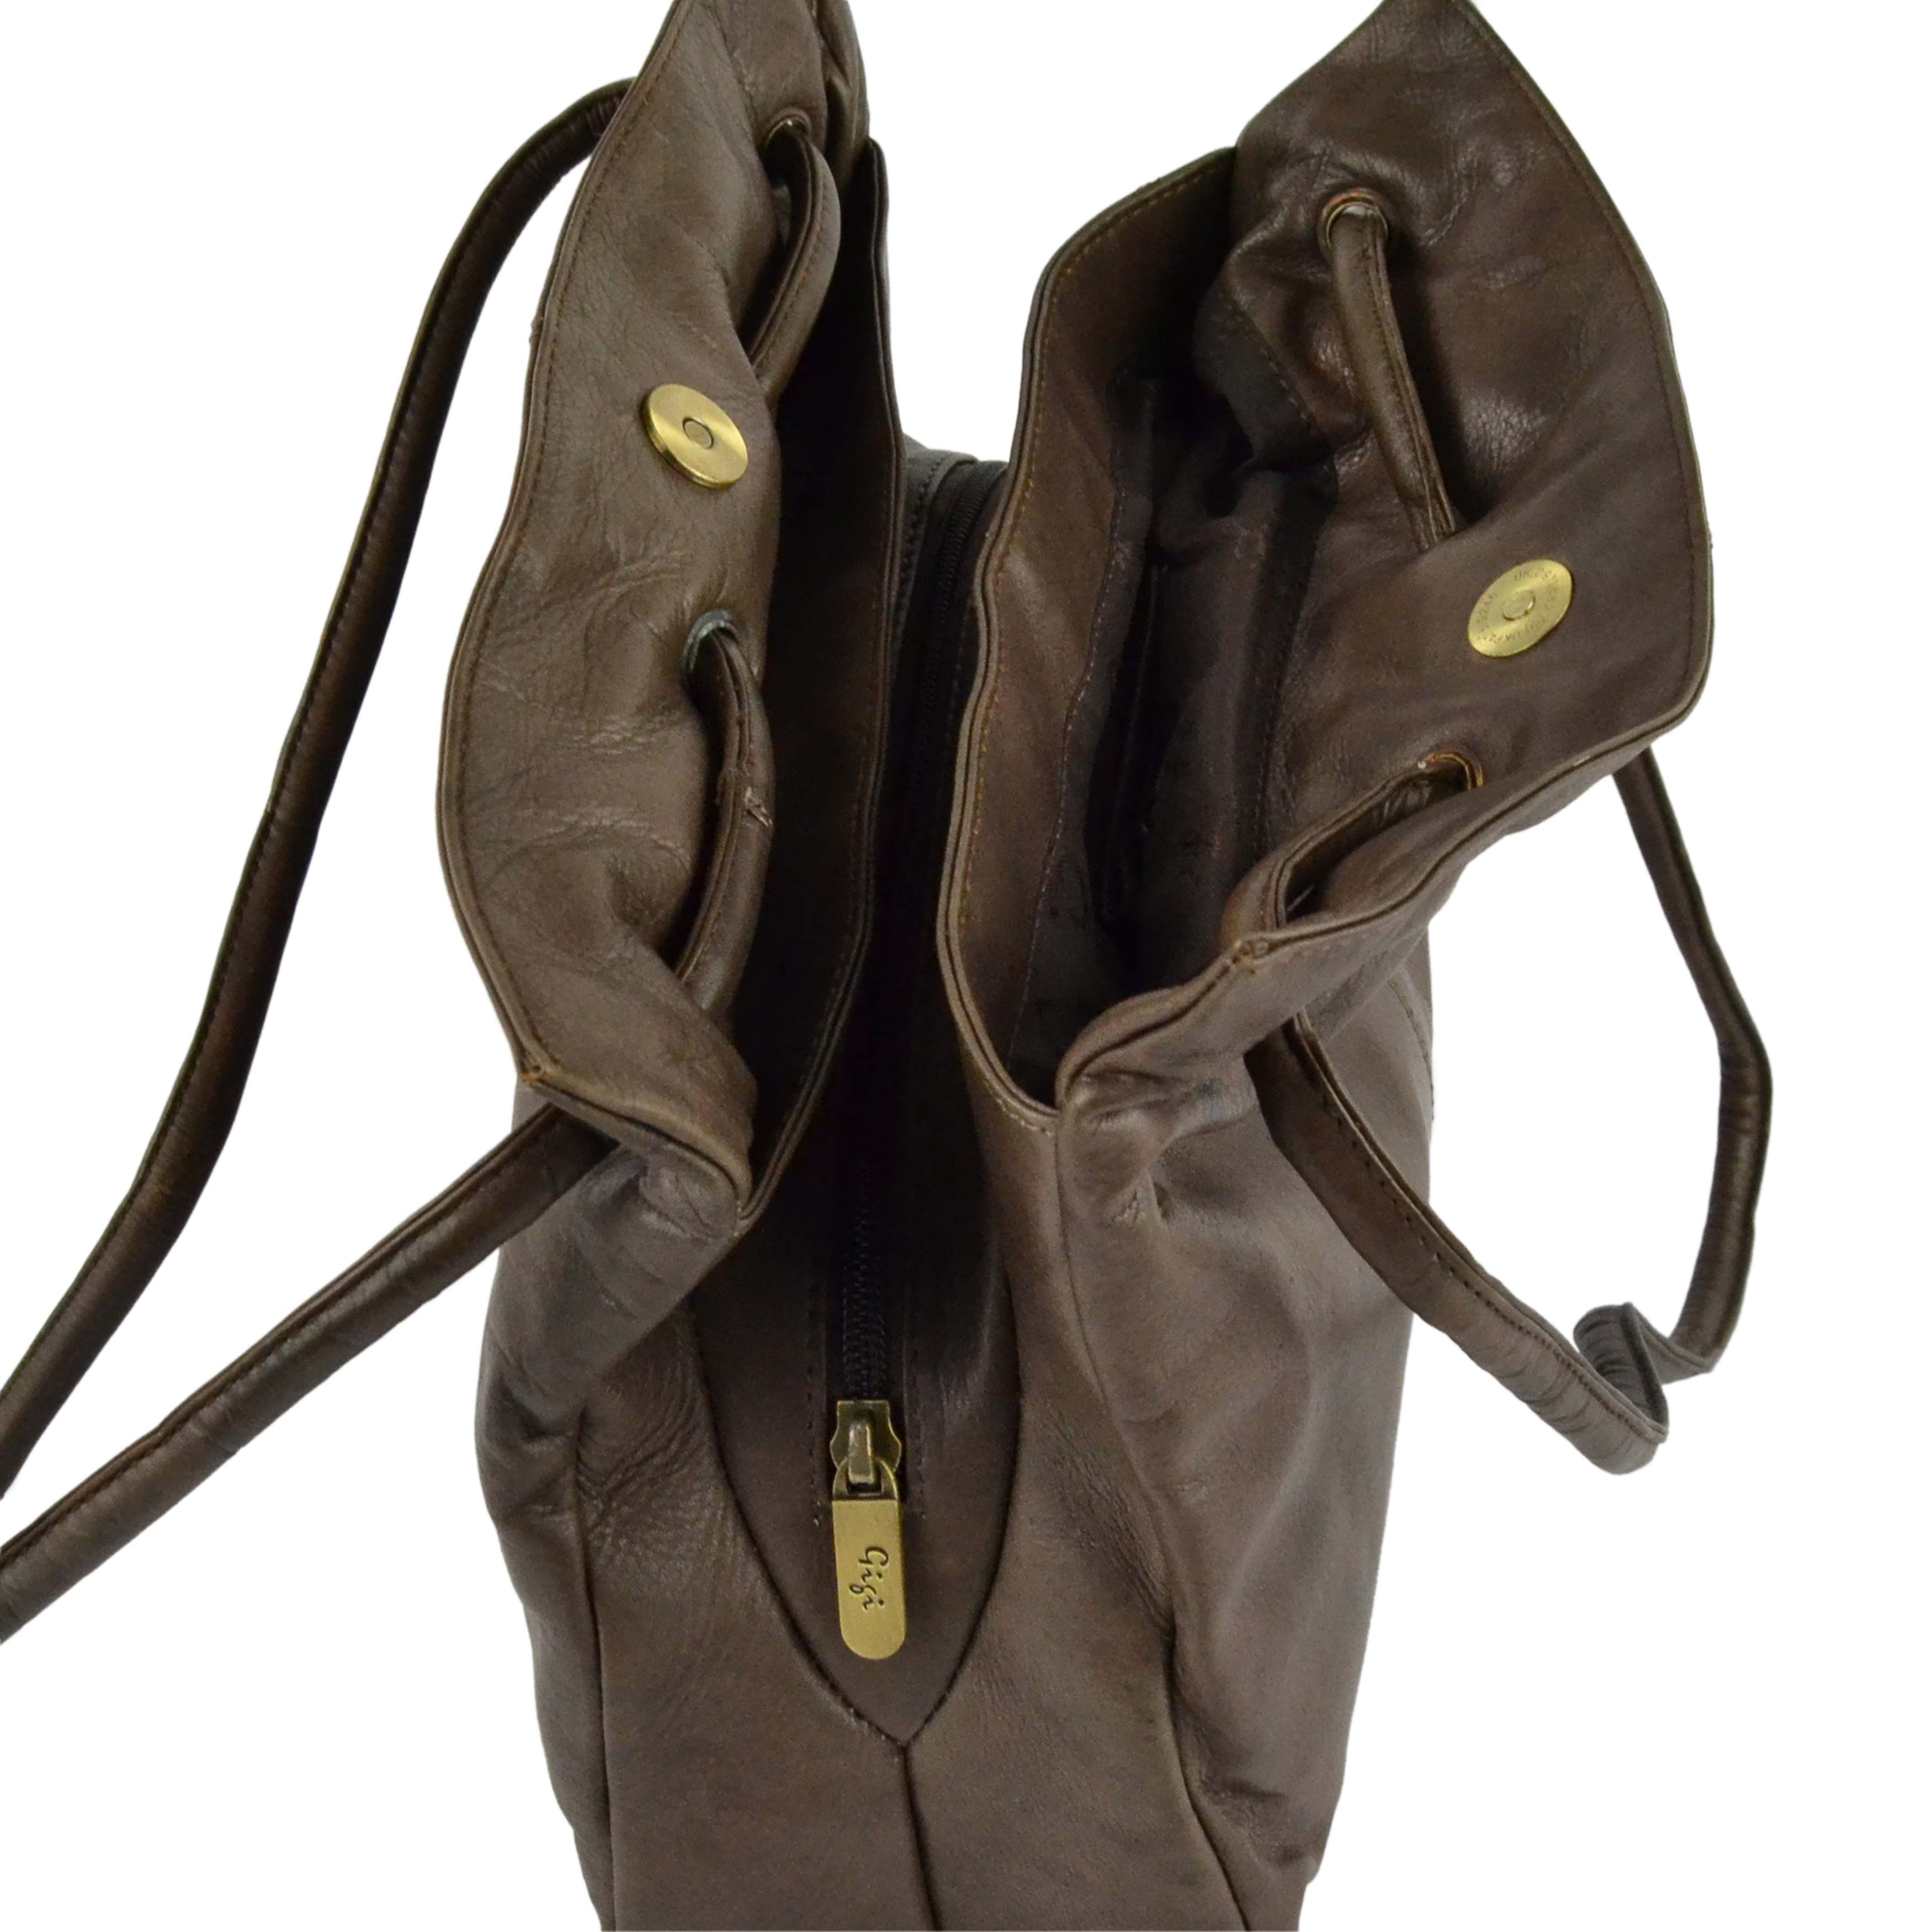 Ladies Soft Leather Shoulder Handbag by GiGi Othello Collection Classic  Stylish